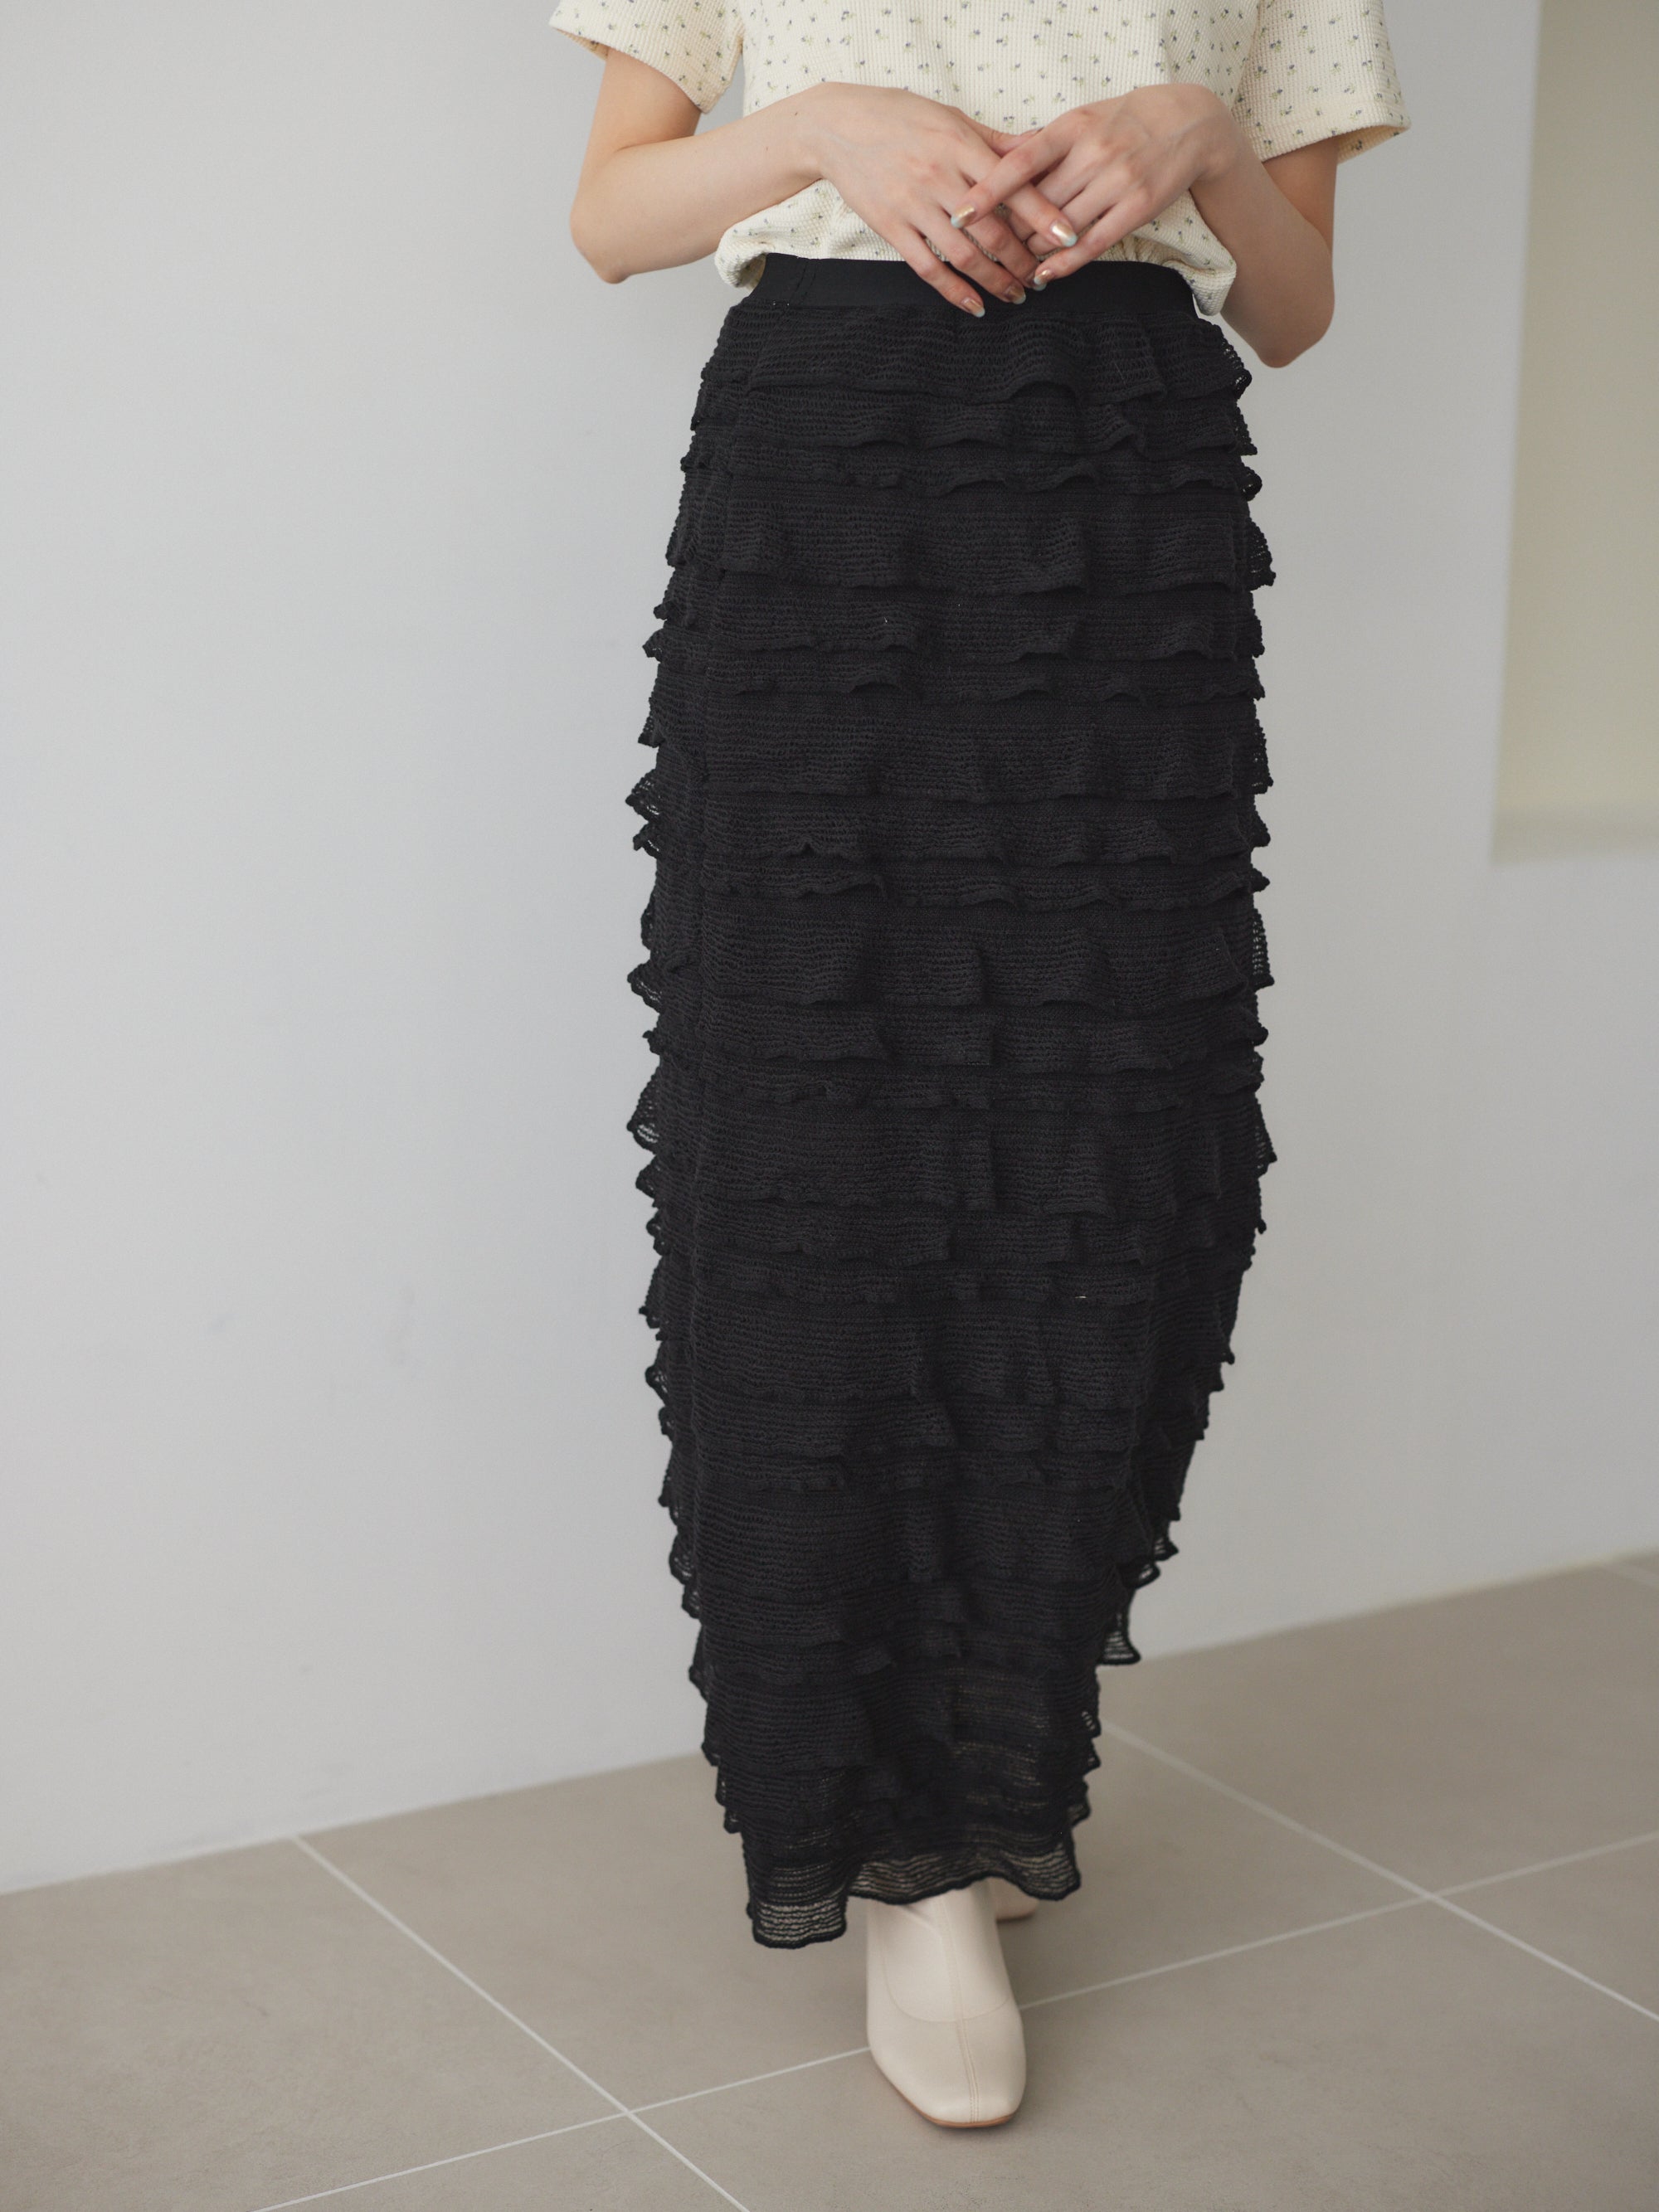 Frills lace skirt